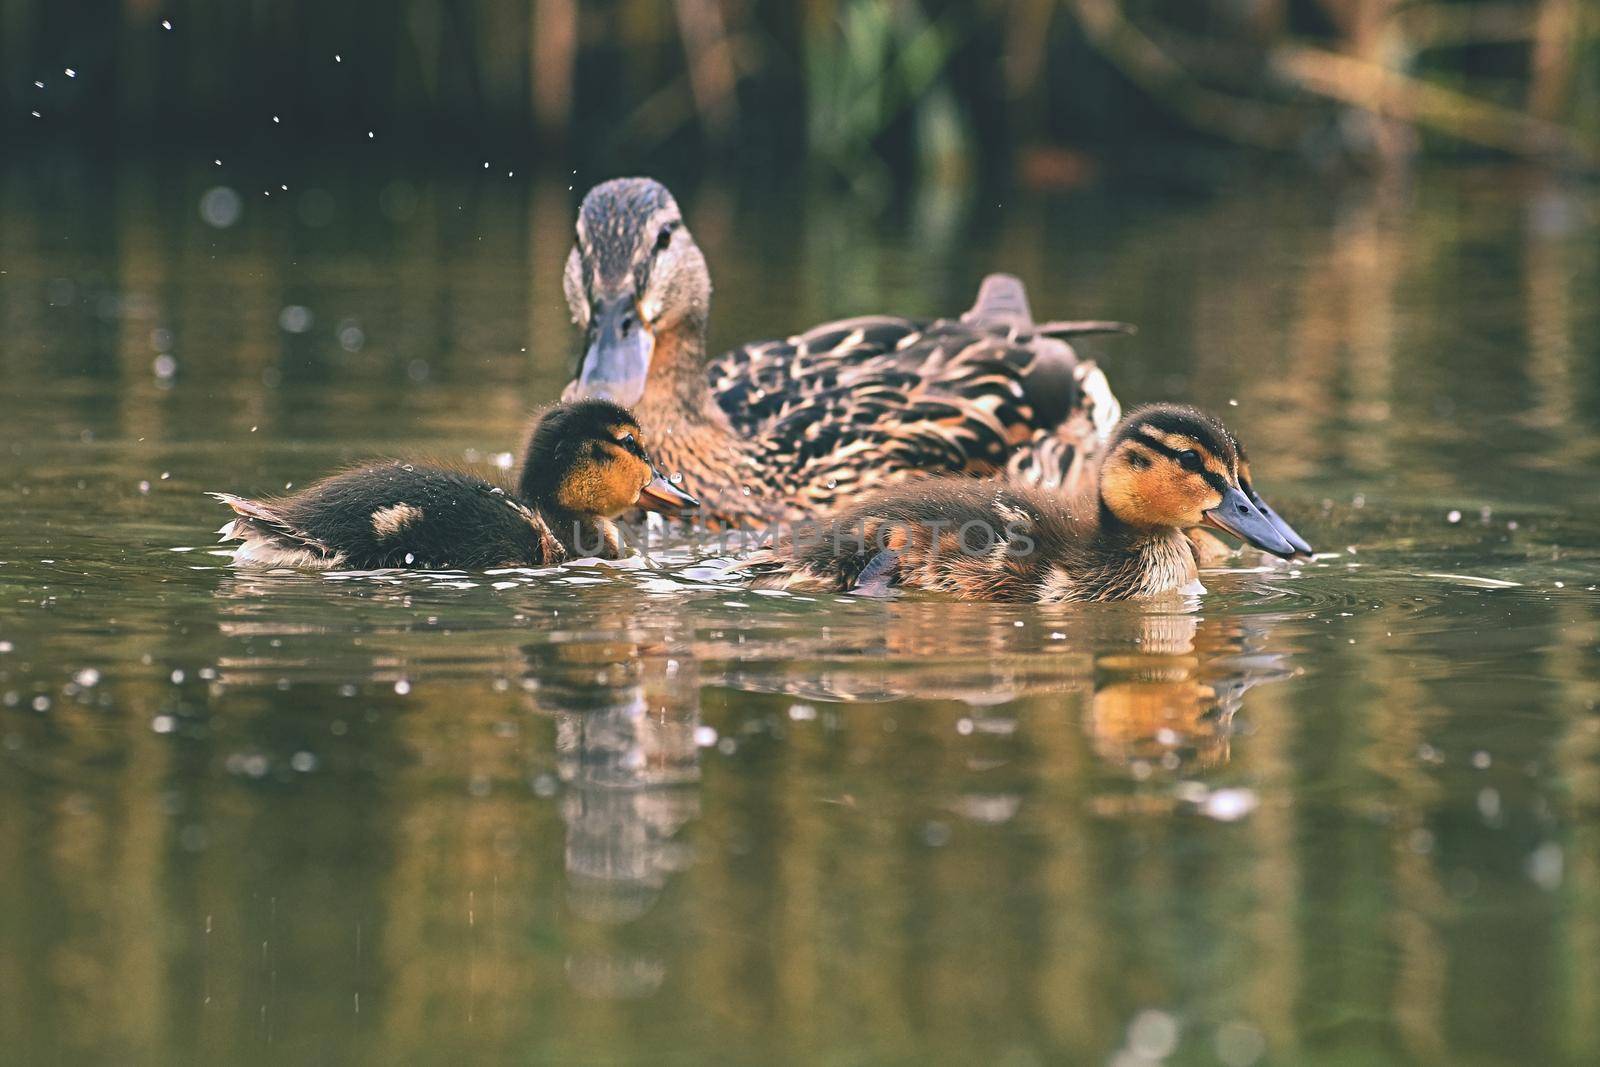 Small ducks on a pond. Fledglings mallards.(Anas platyrhynchos)